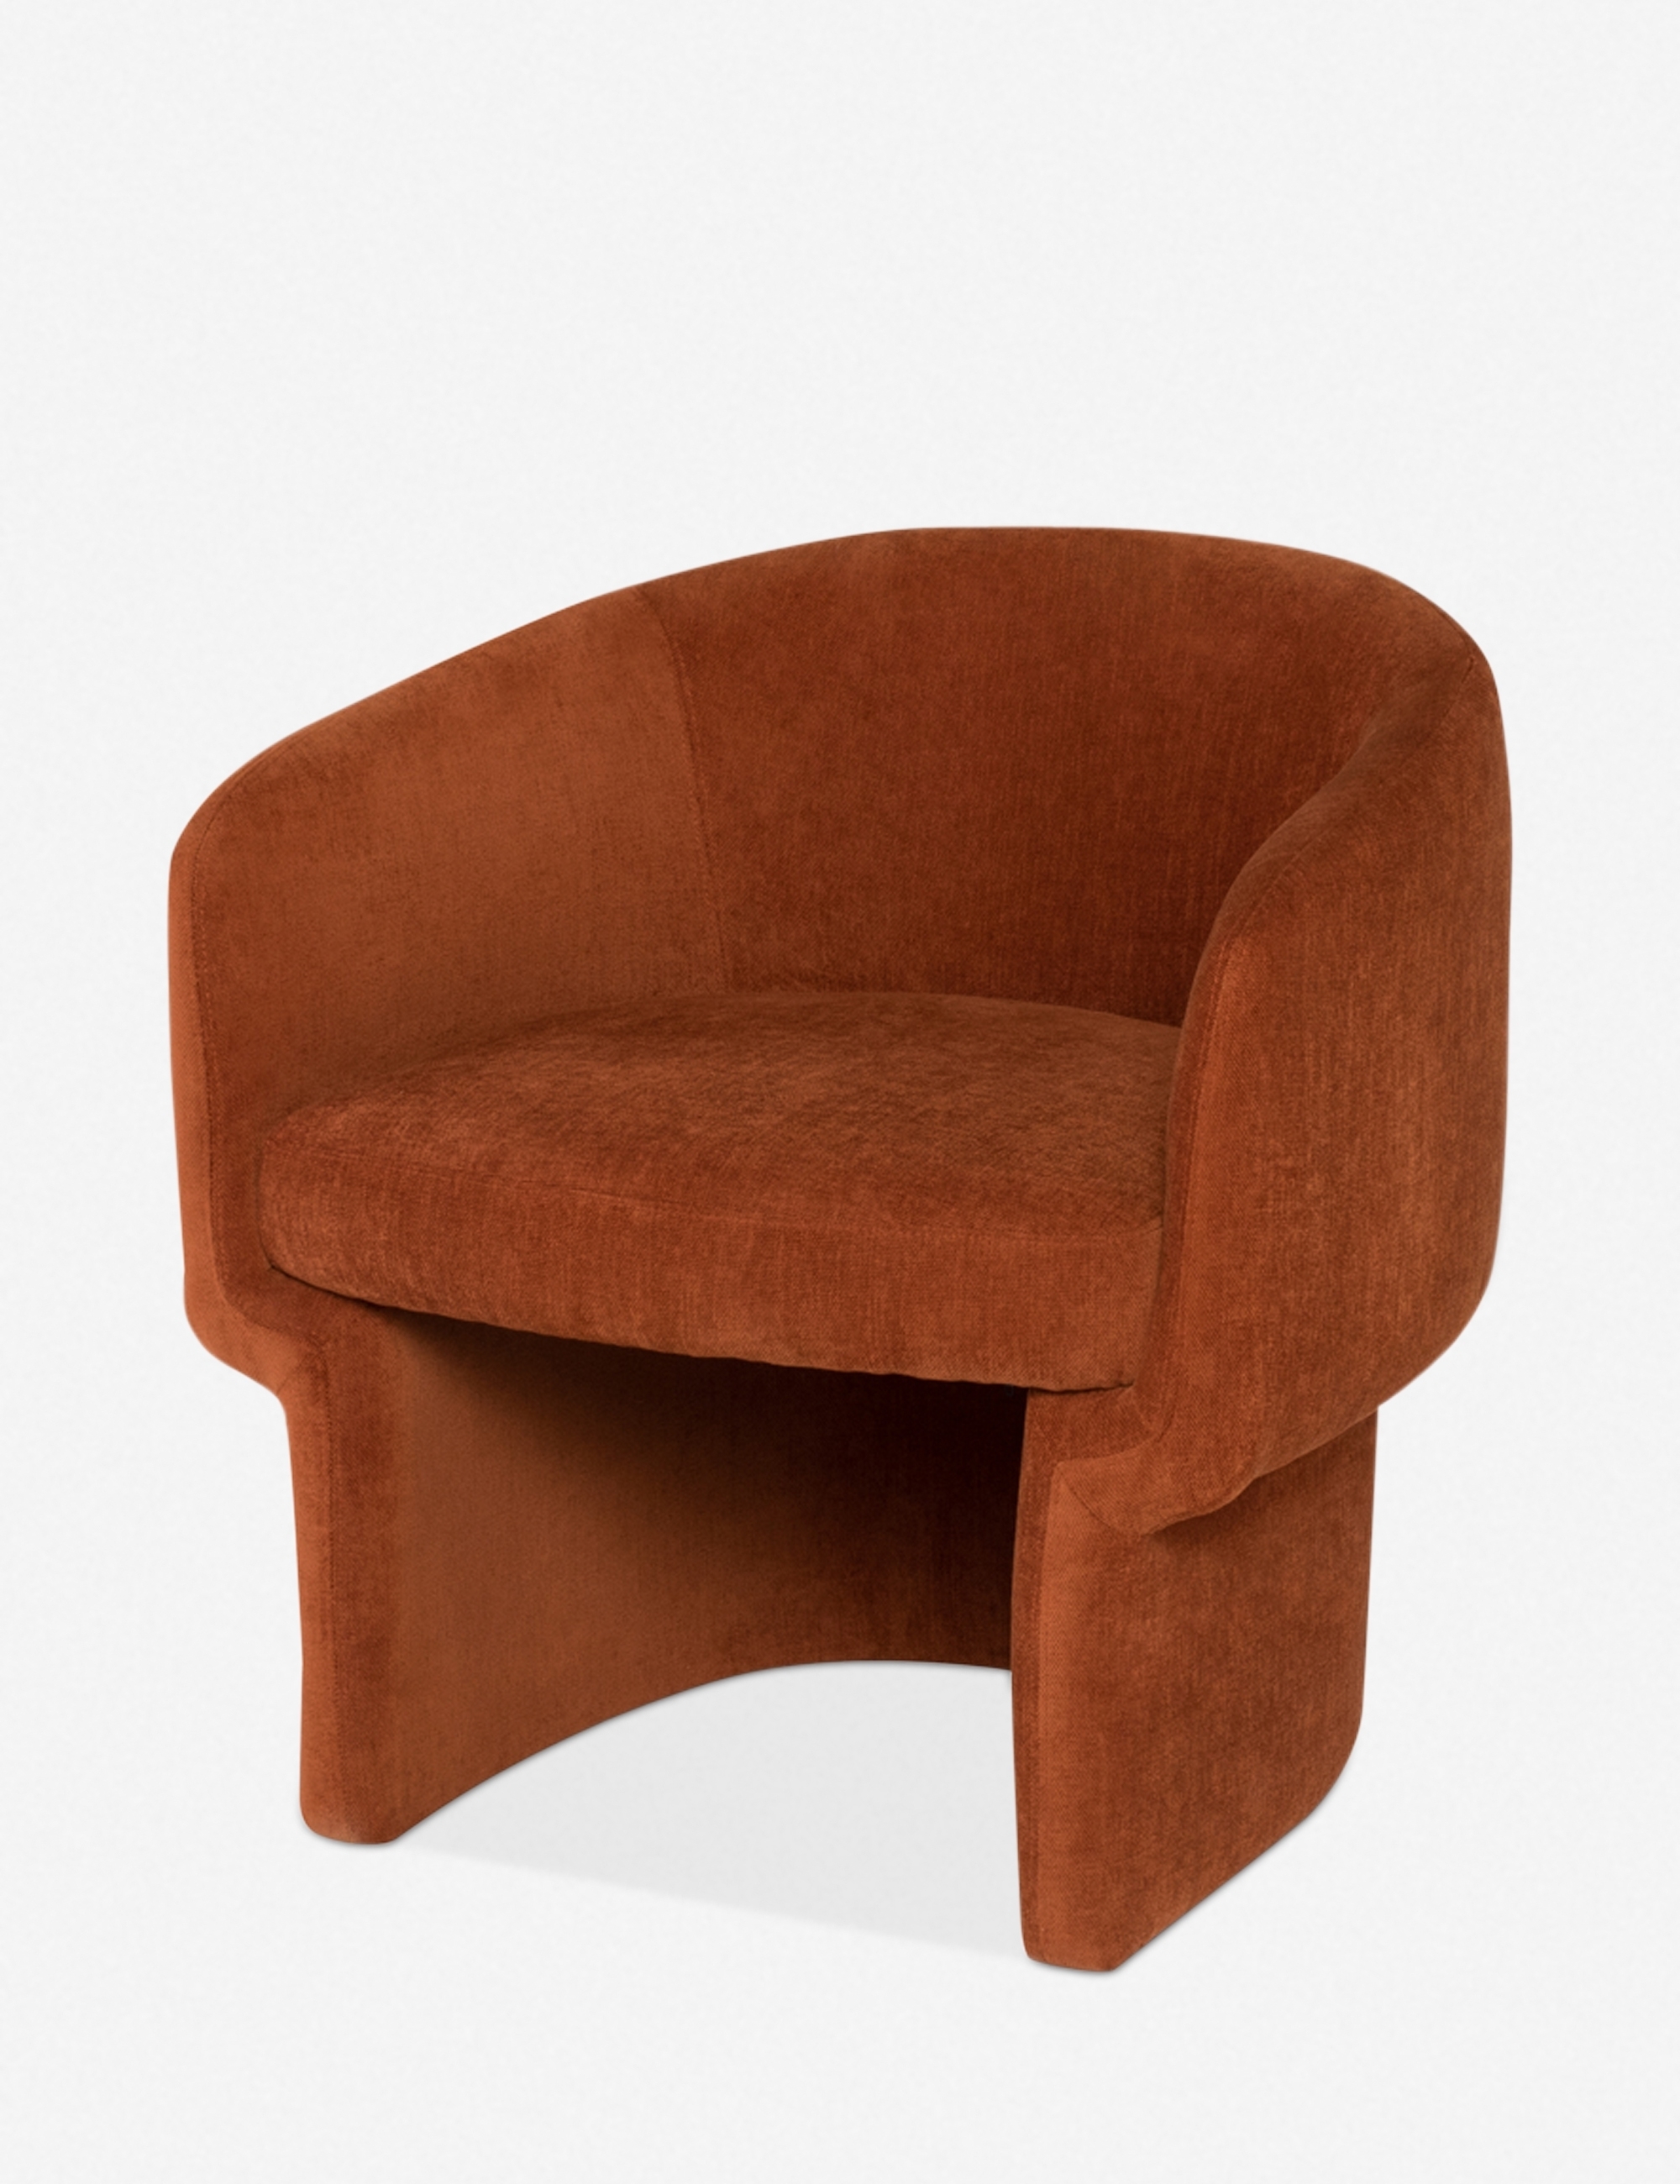 Pomona Occasional Chair, Terracotta - Image 2